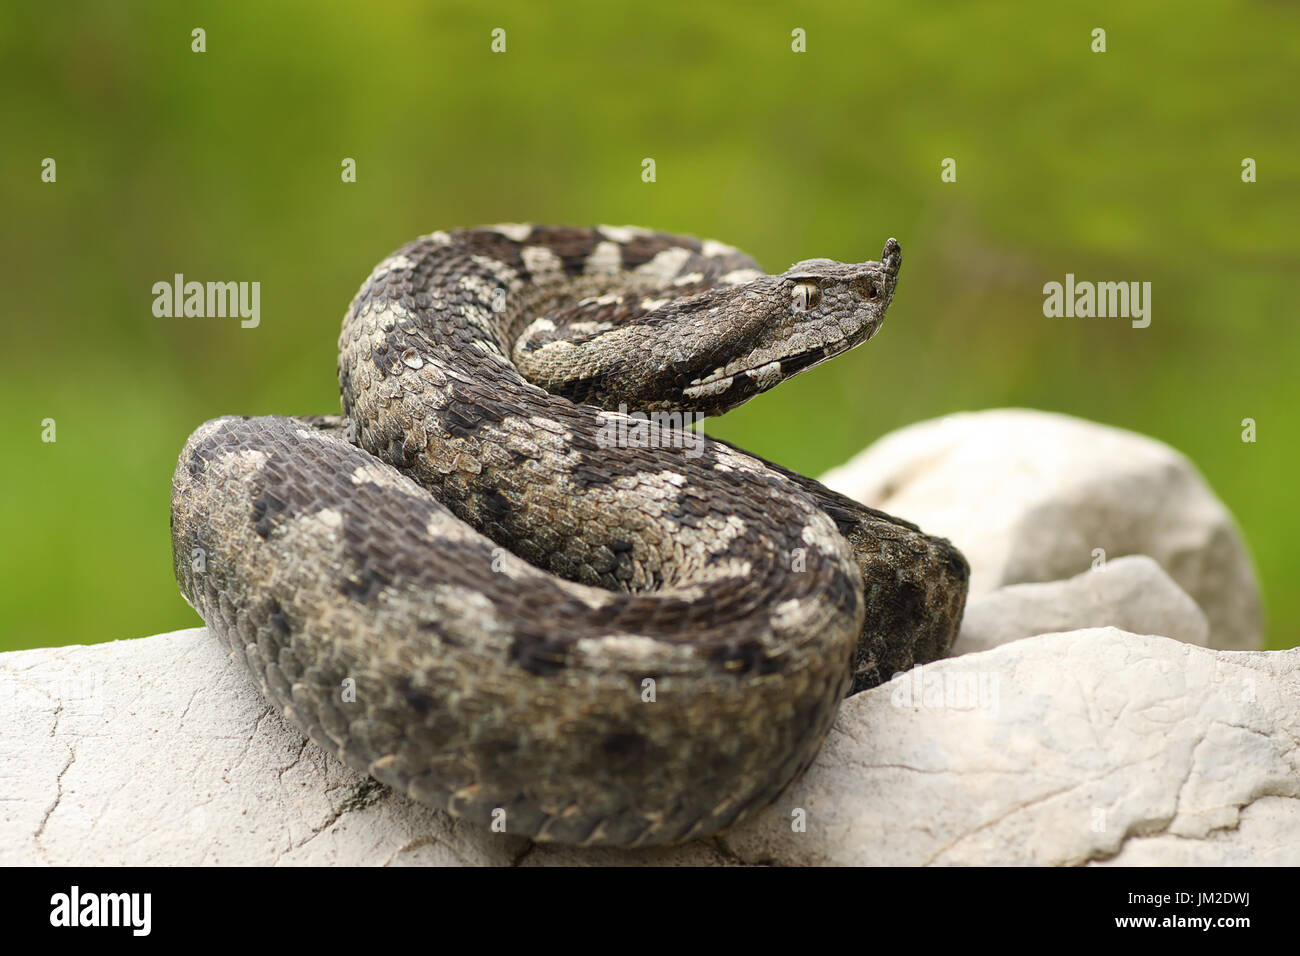 beautiful nosed viper on a rock ( Vipera ammodytes, image taken in natural habitat on a wild animal ) Stock Photo